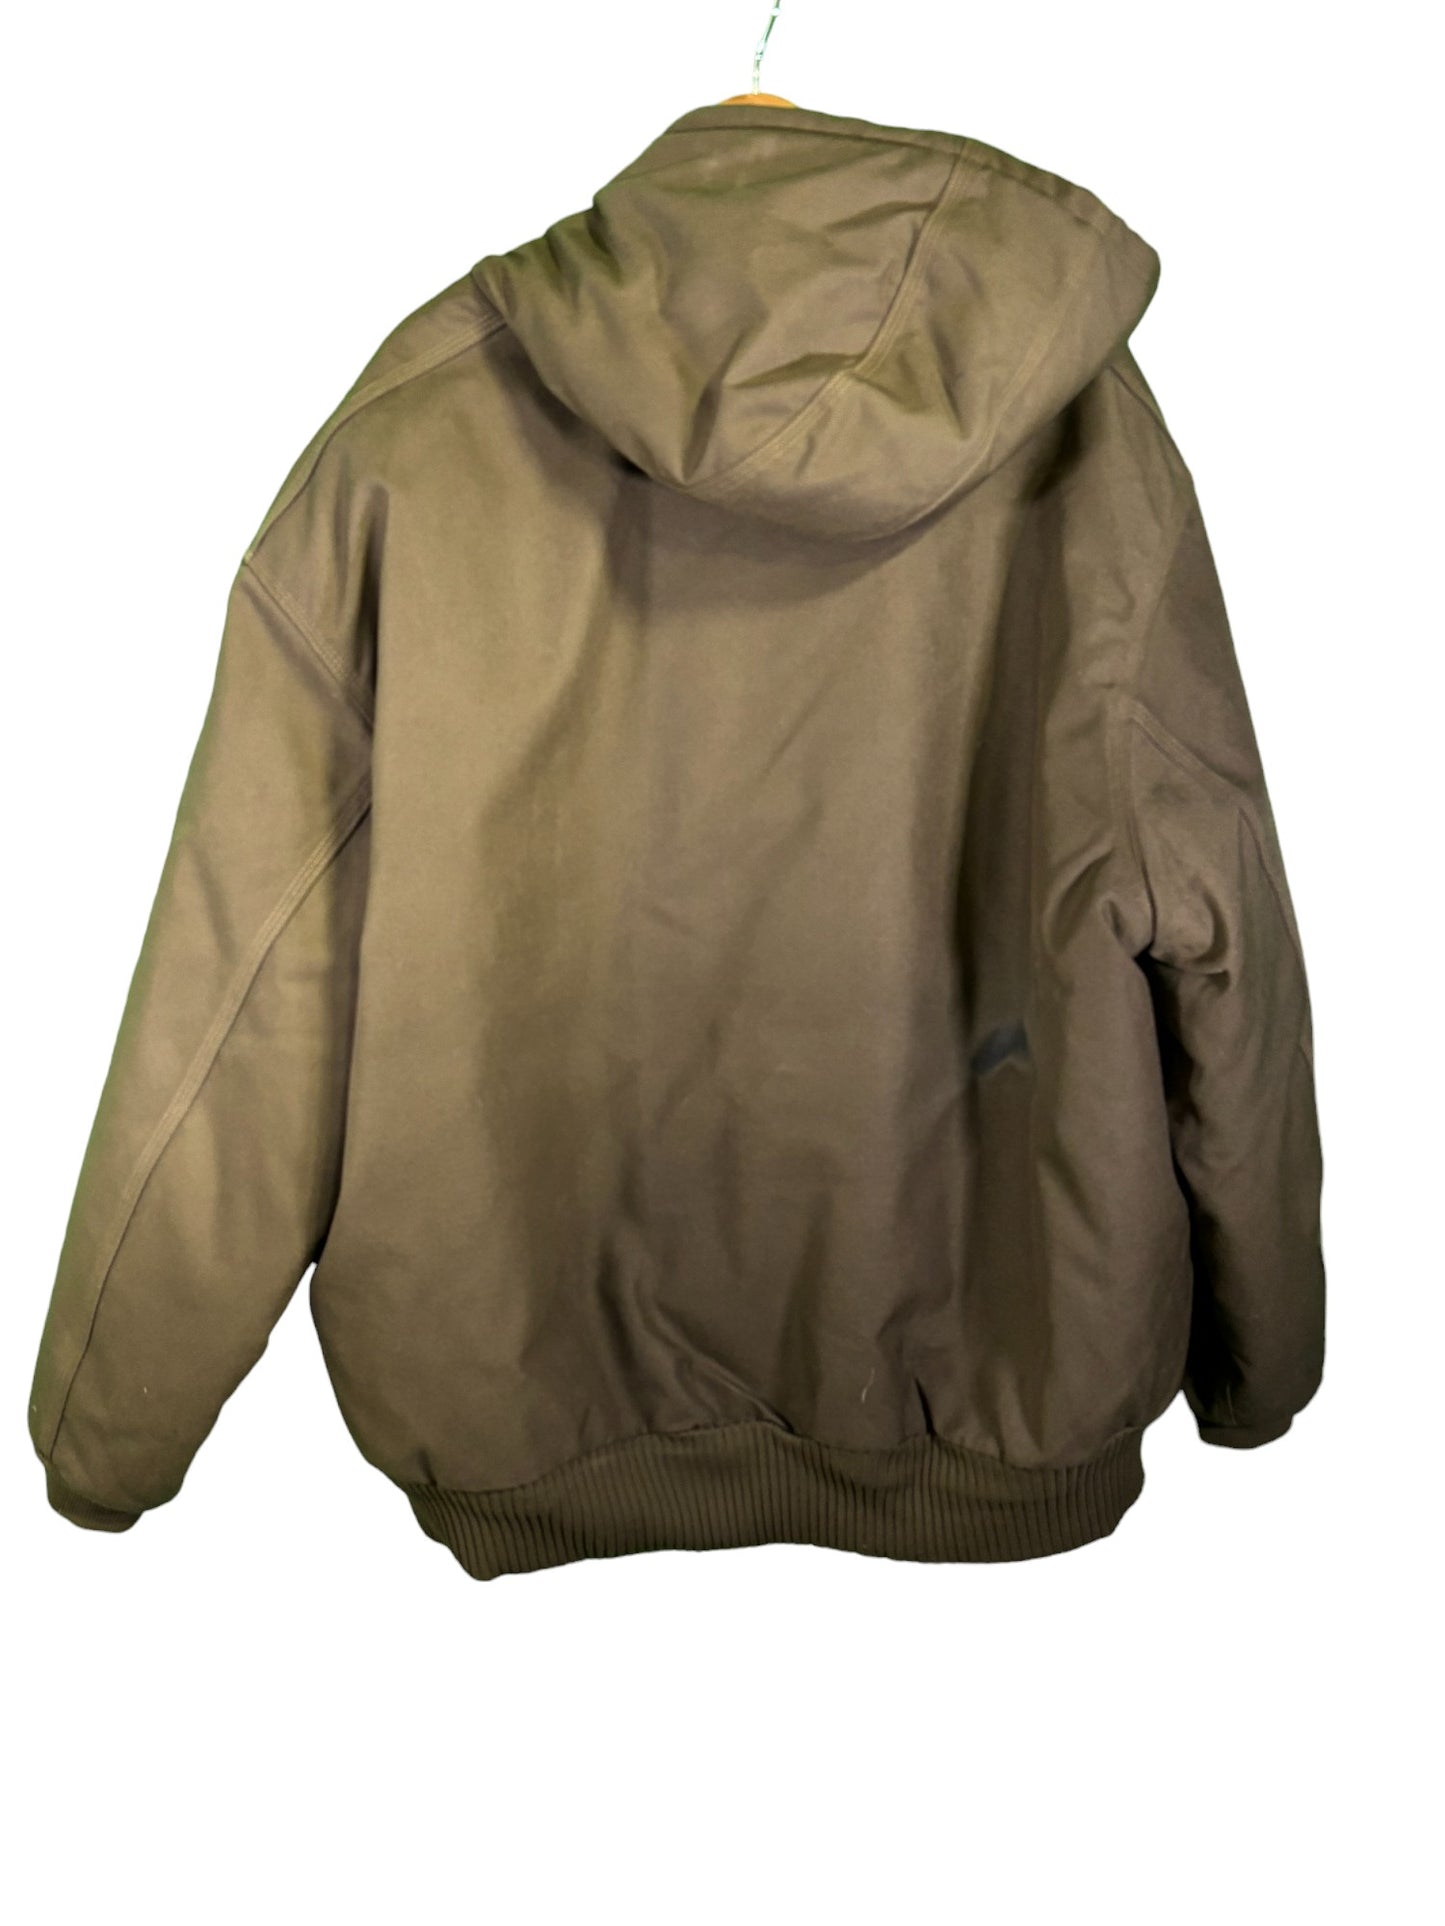 Vintage Carhartt J33 BRK Full Zip Hooded Work Jacket Size 3XL